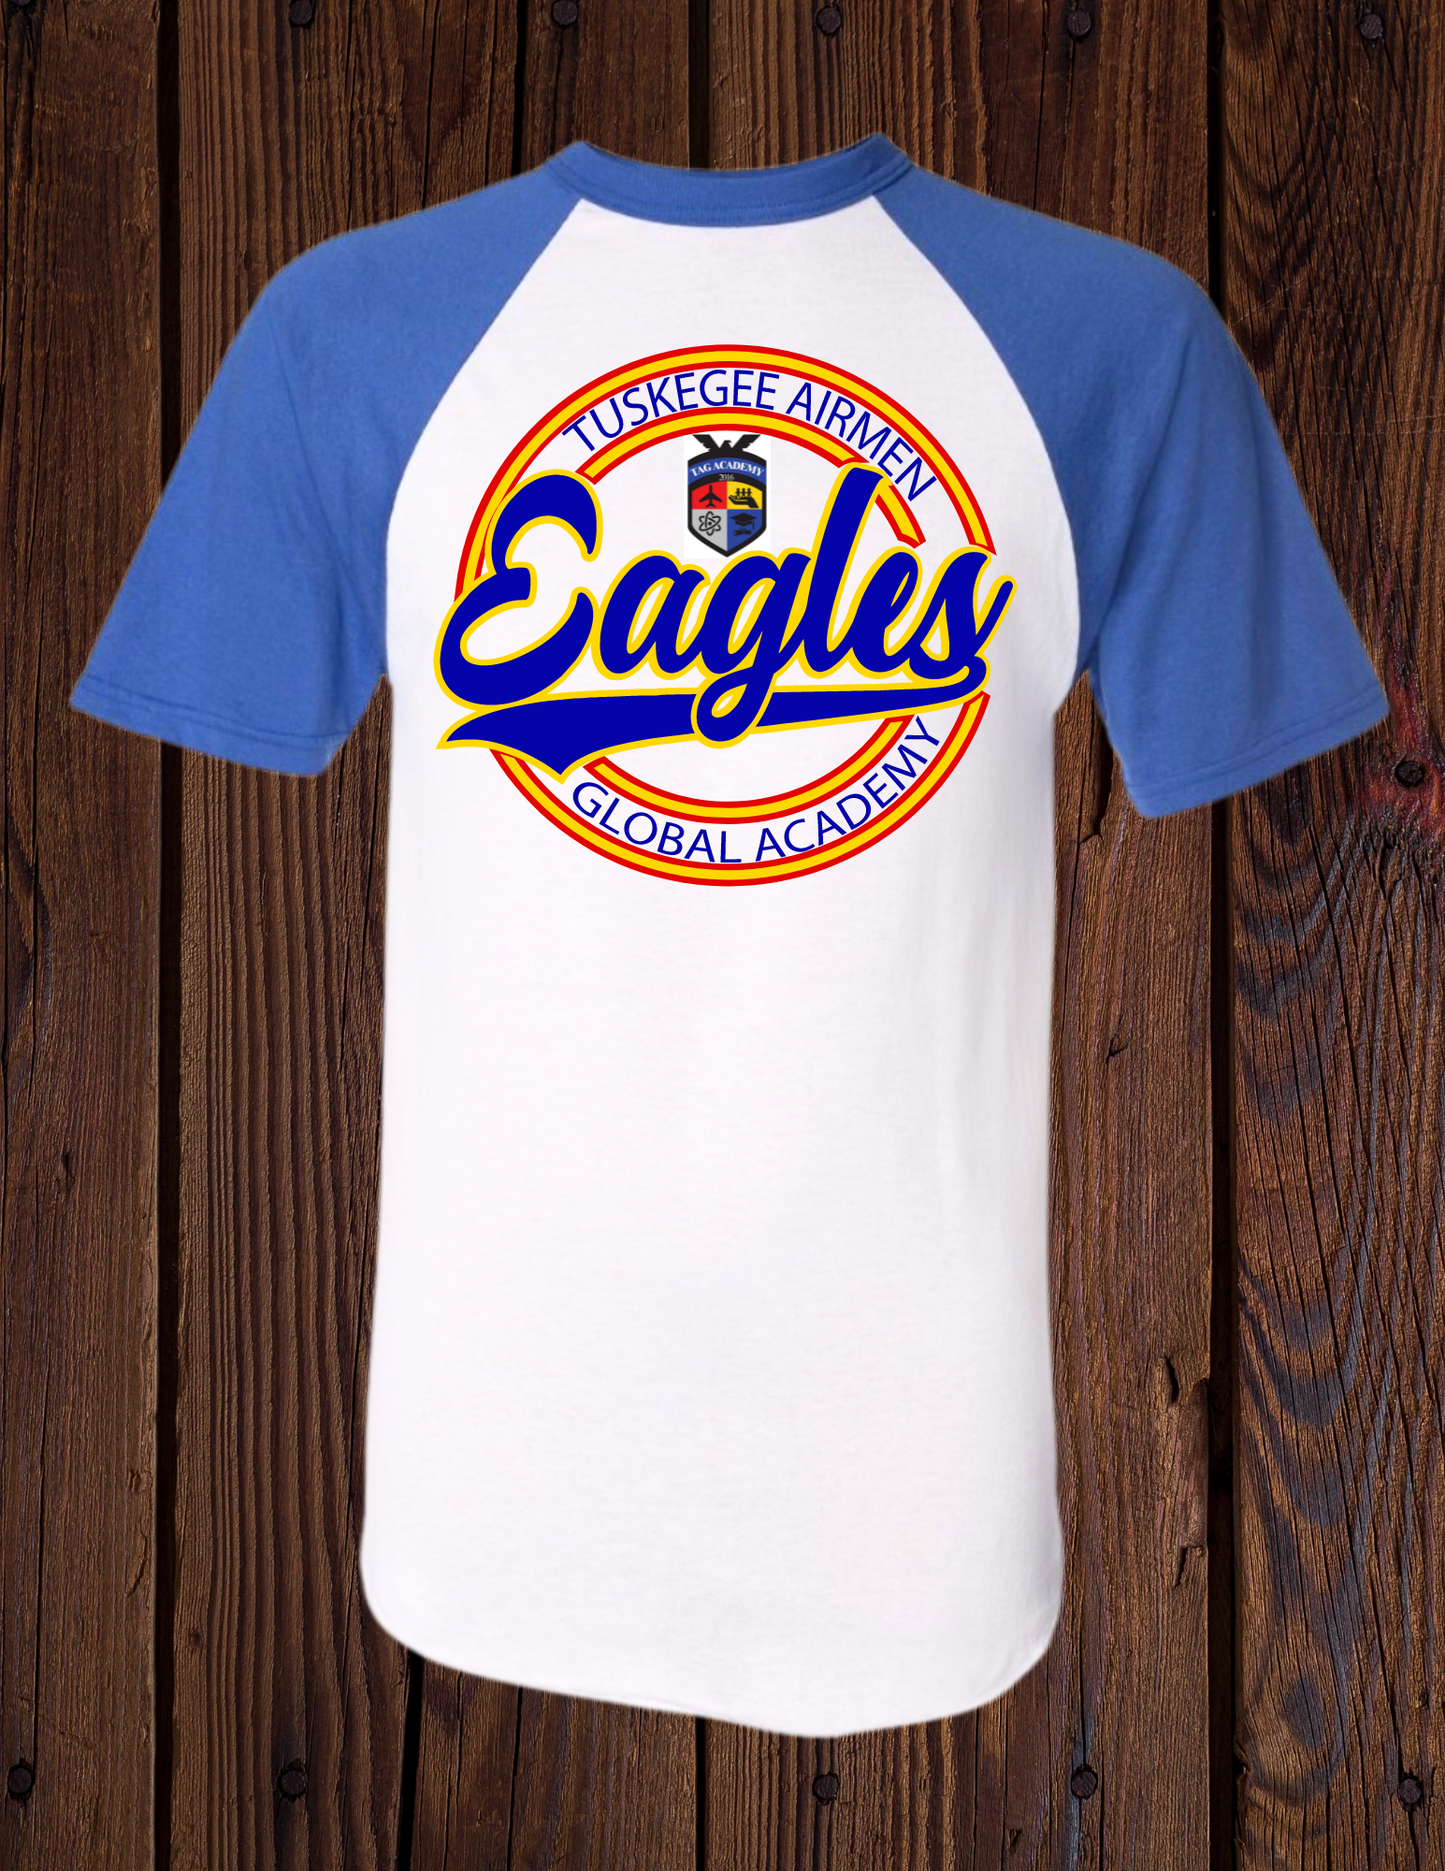 Eagles Shirt